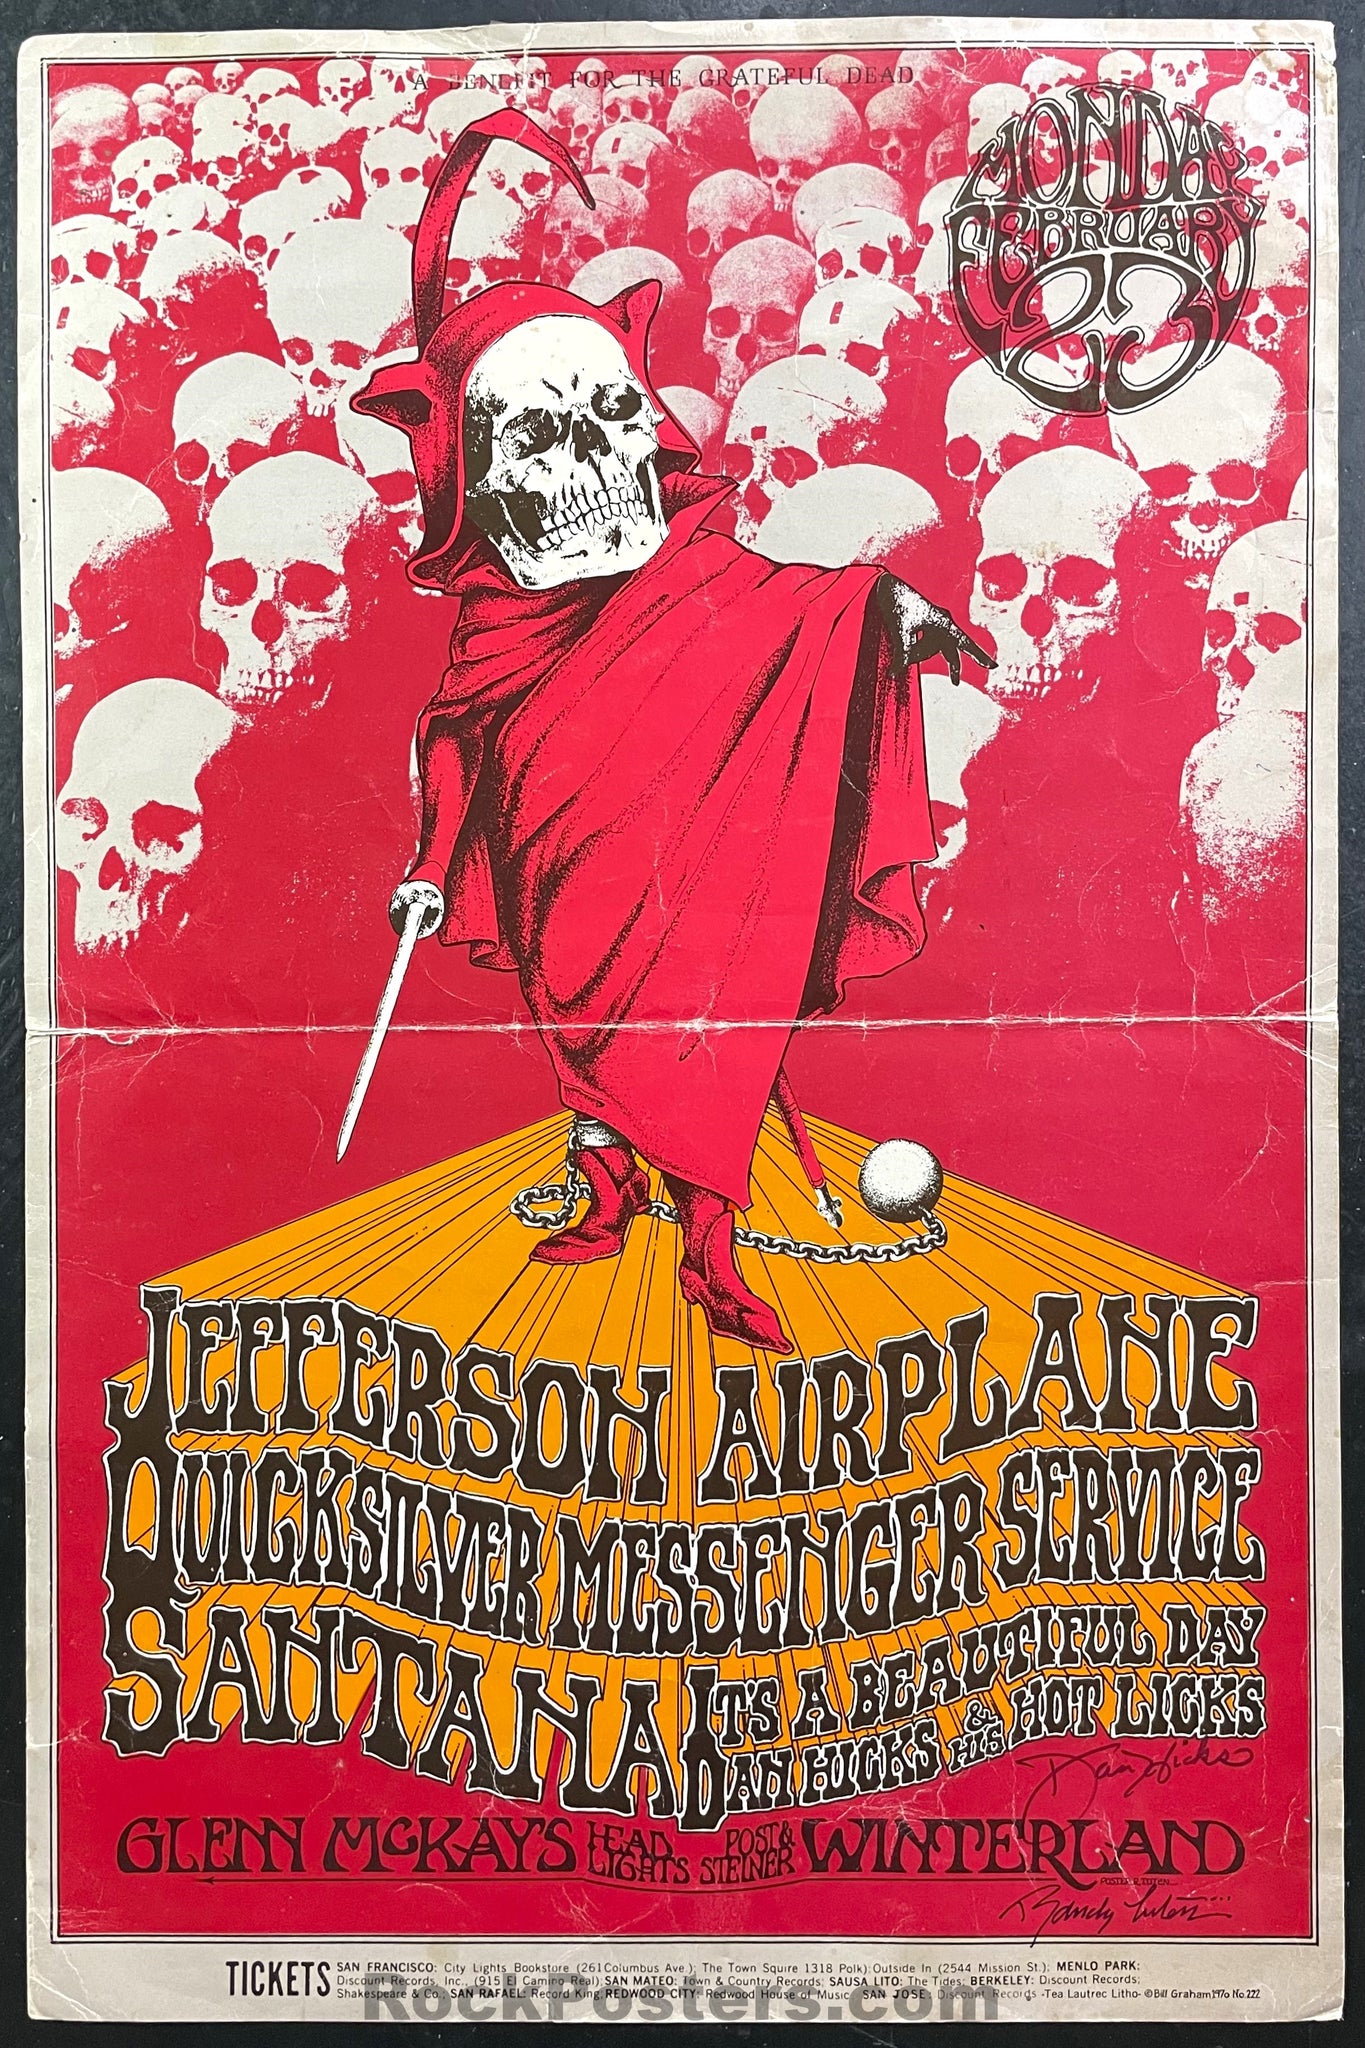 AUCTION - BG-222 - Jefferson Airplane - Dan Hick's & Tuten Signed - 1970 Poster - Winterland - Rough